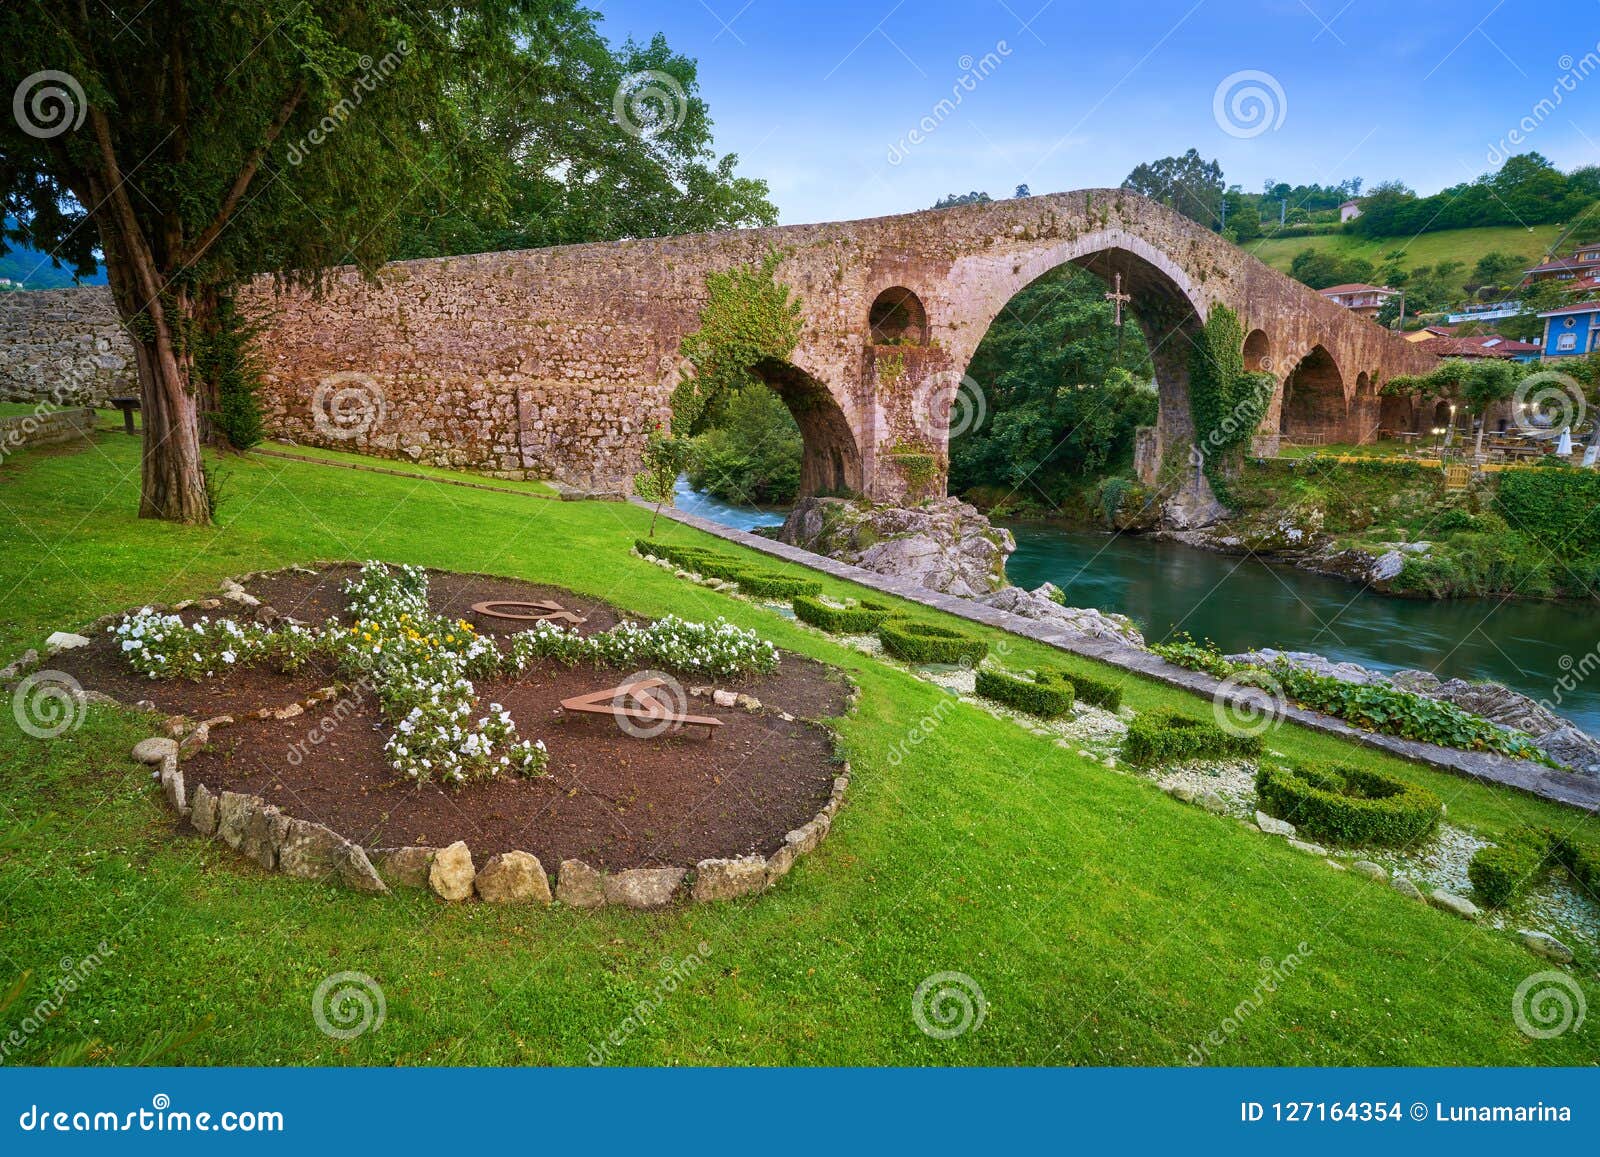 cangas de onis roman bridge in asturias spain